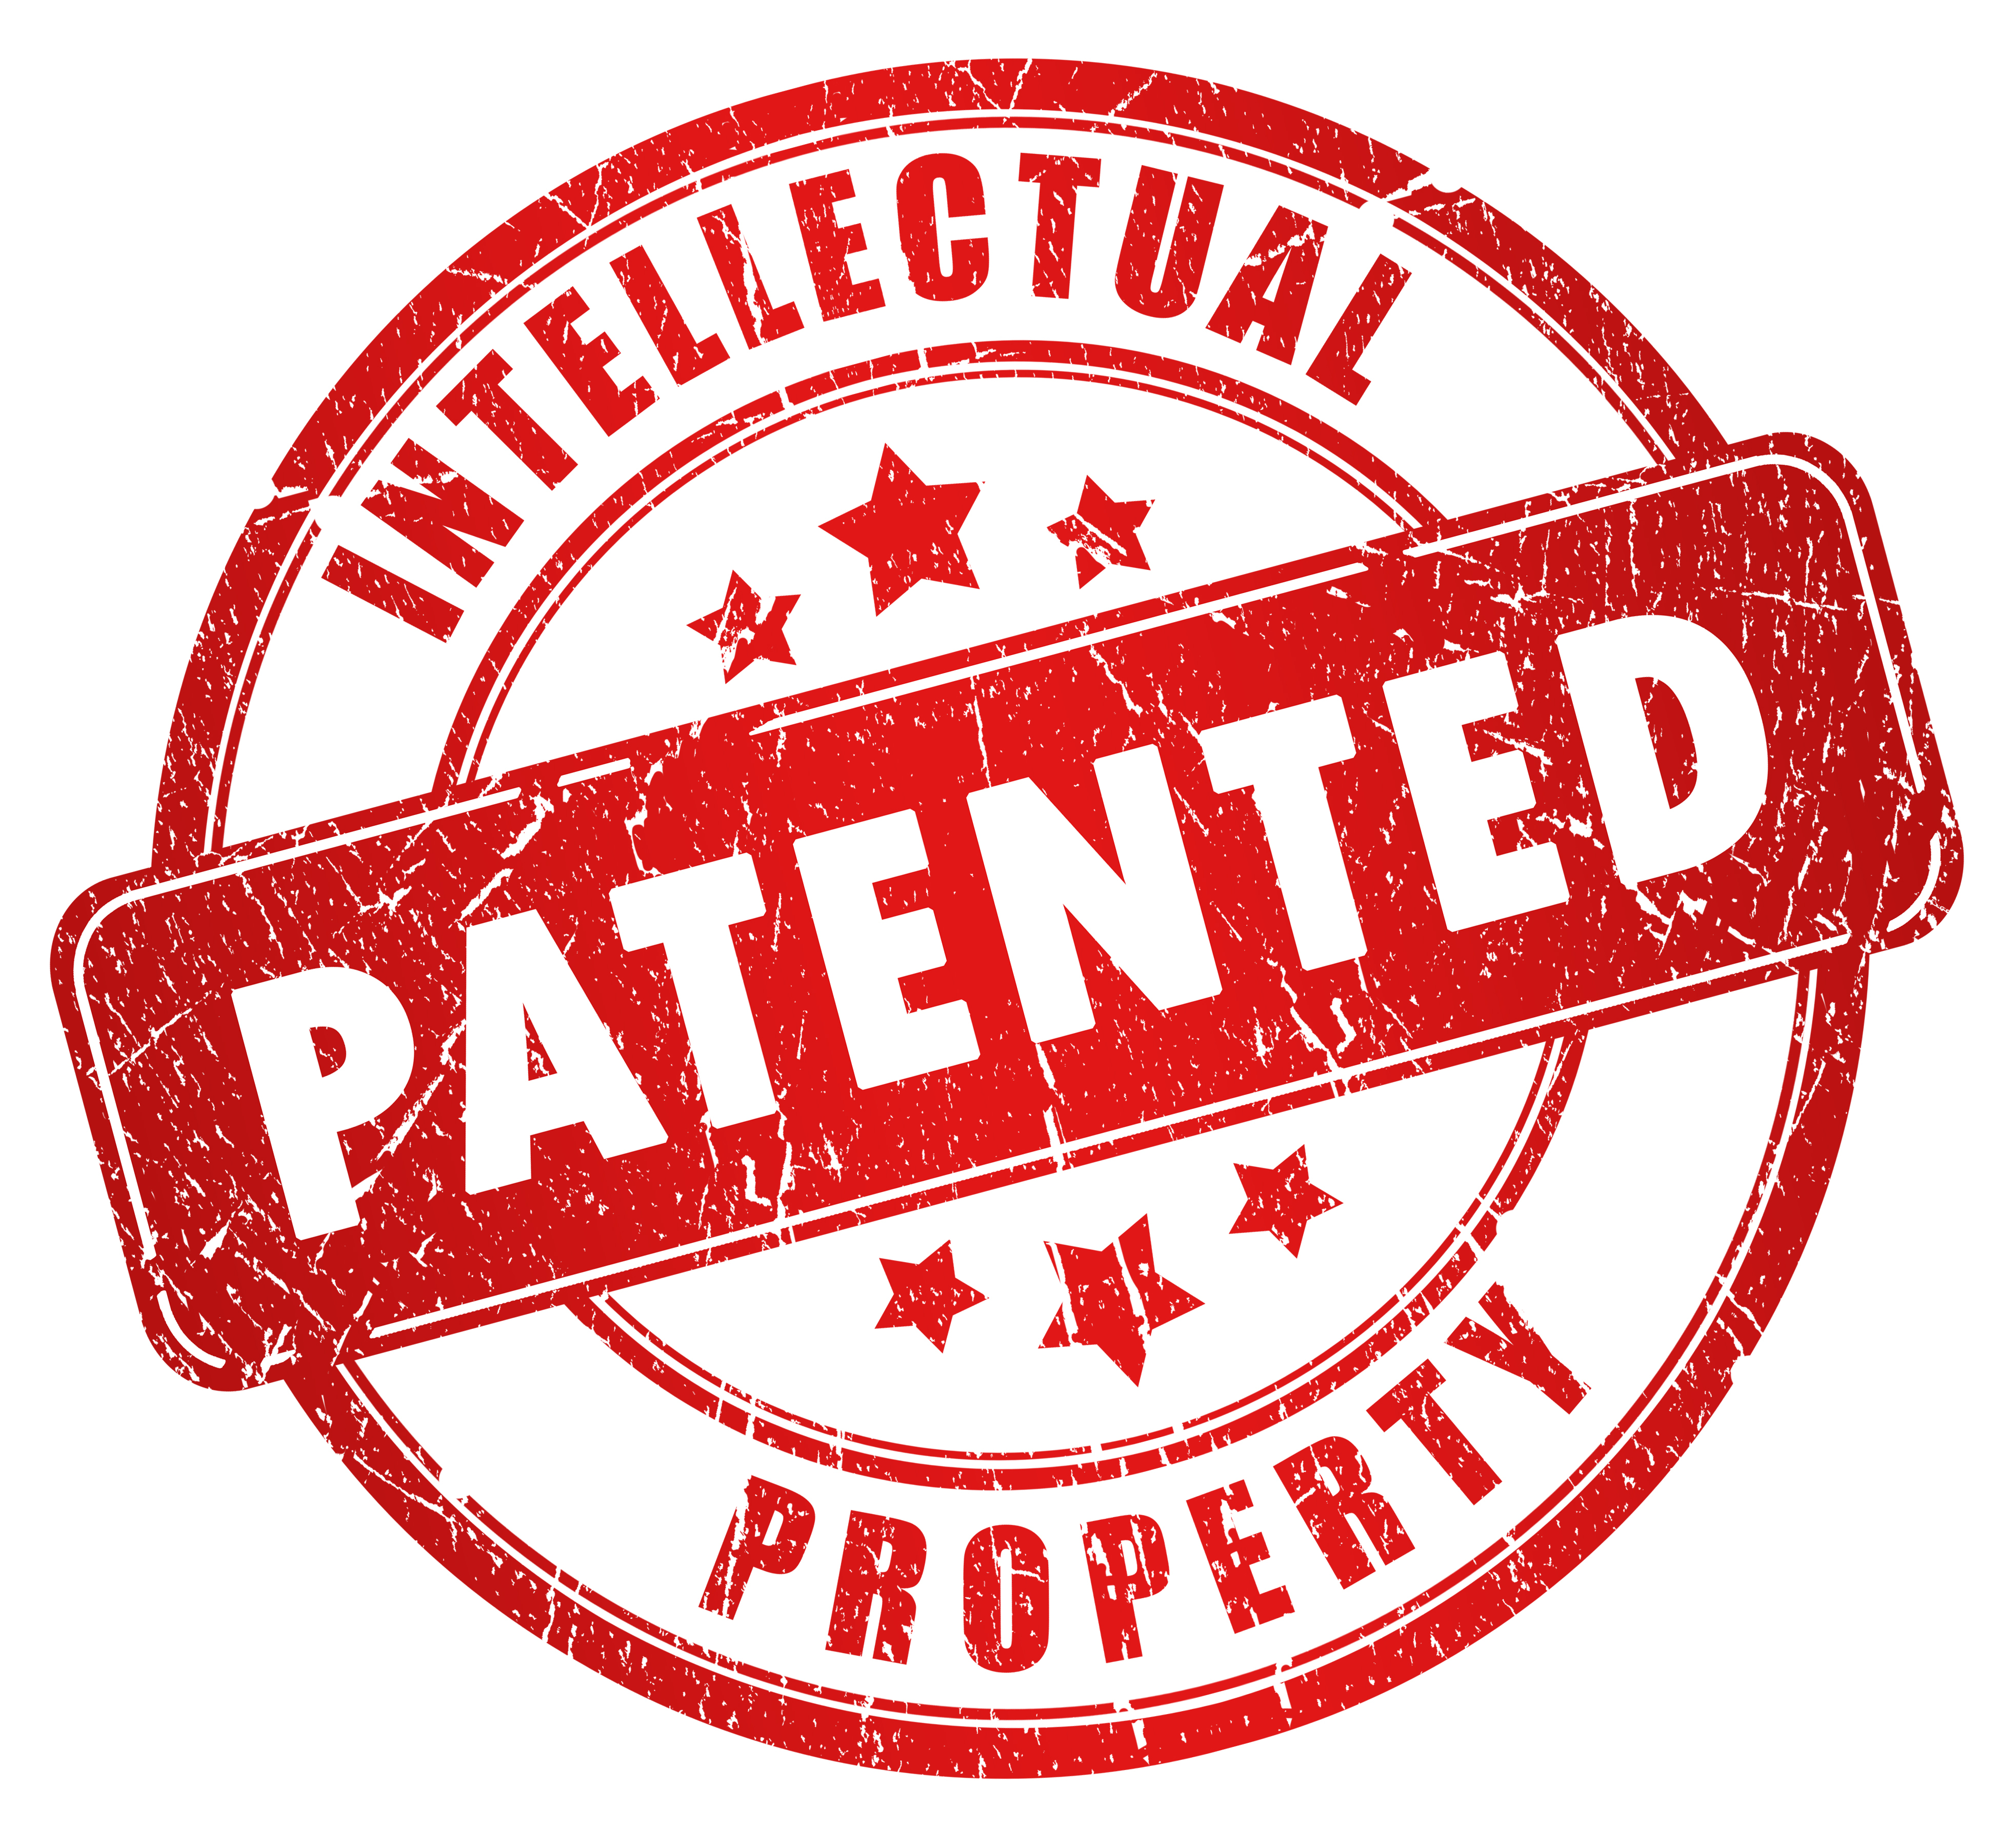 Patenty